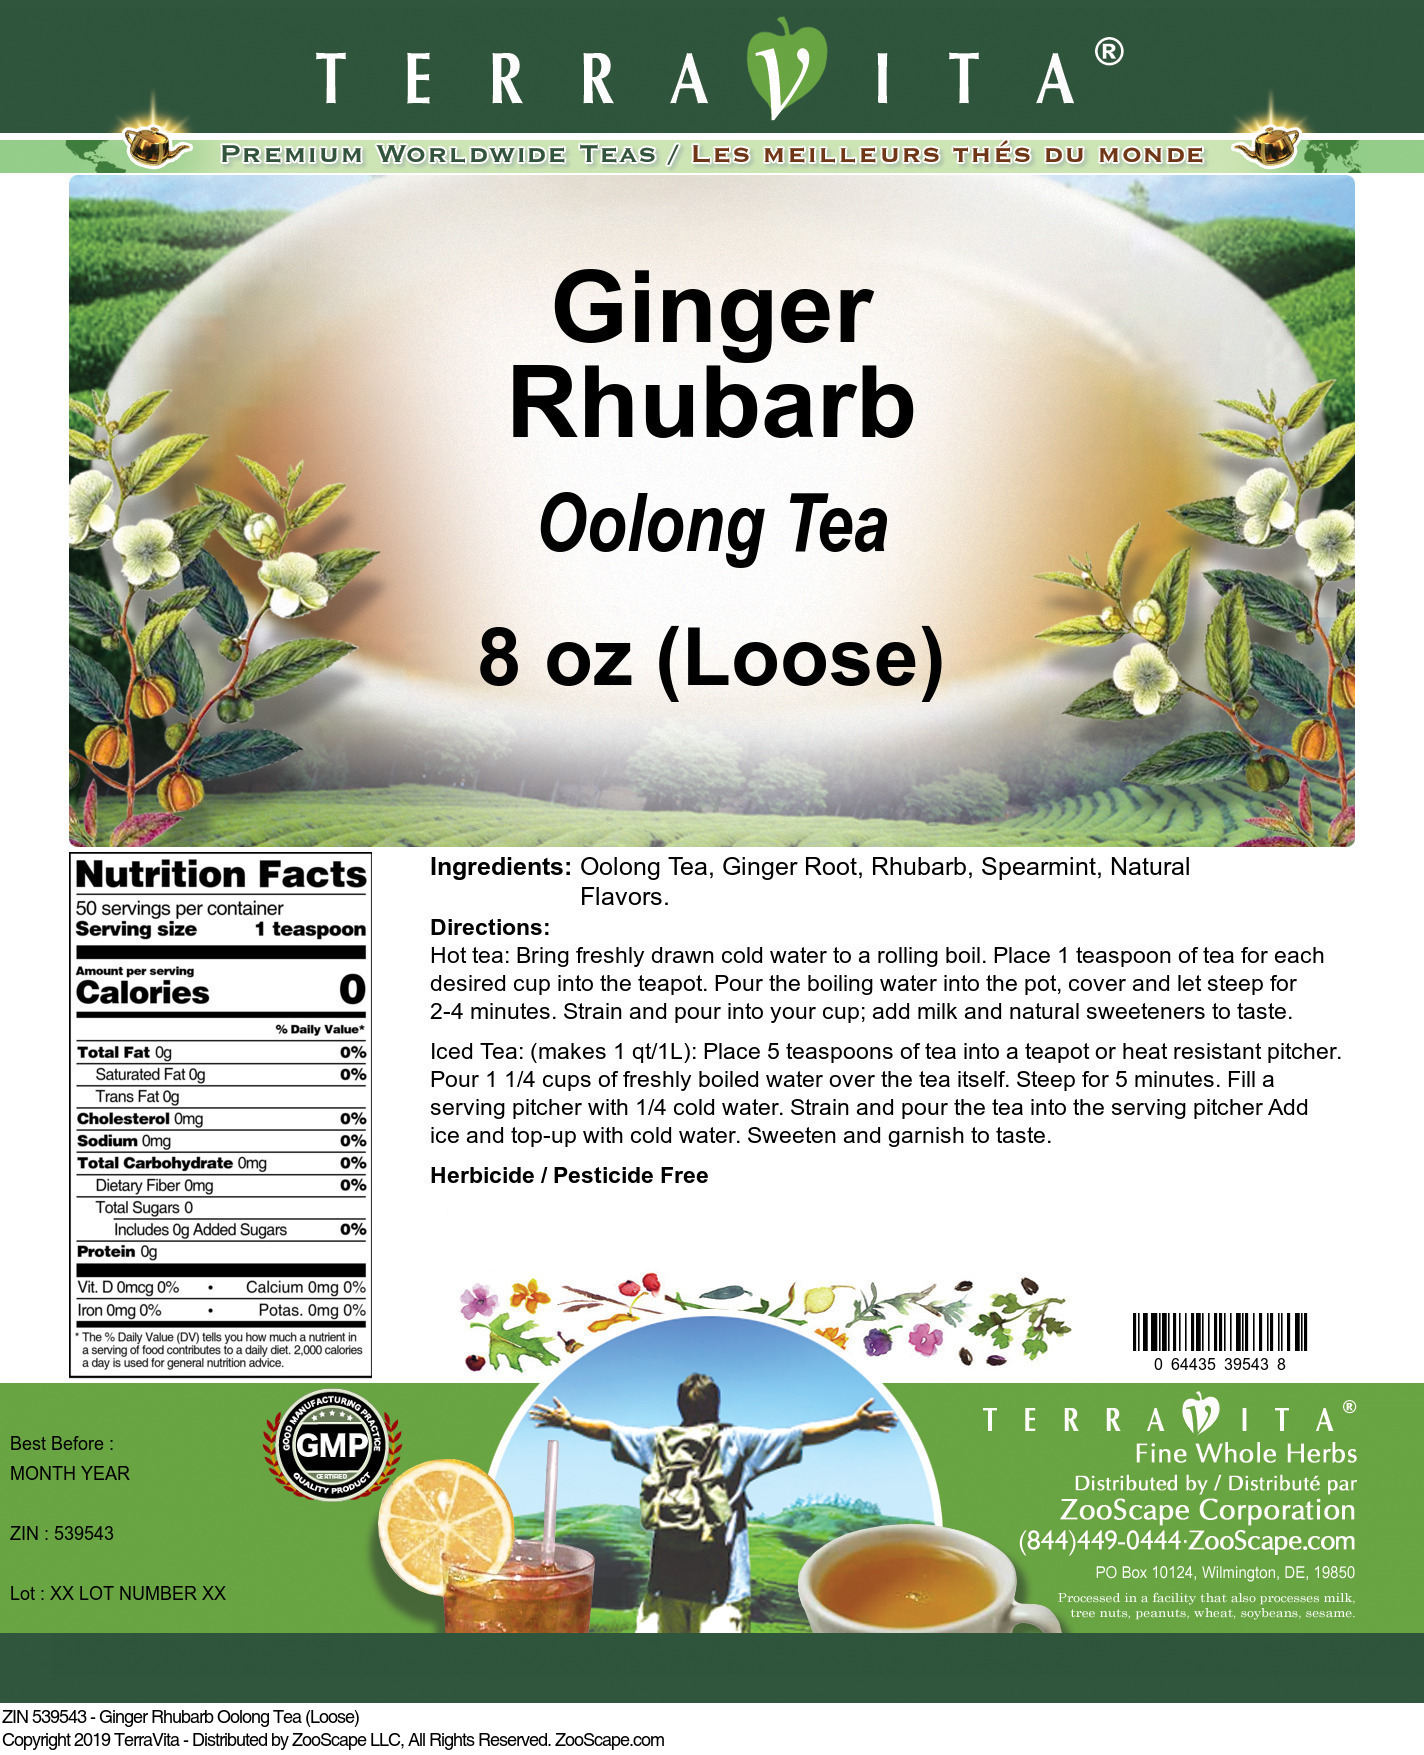 Ginger Rhubarb Oolong Tea (Loose) - Label